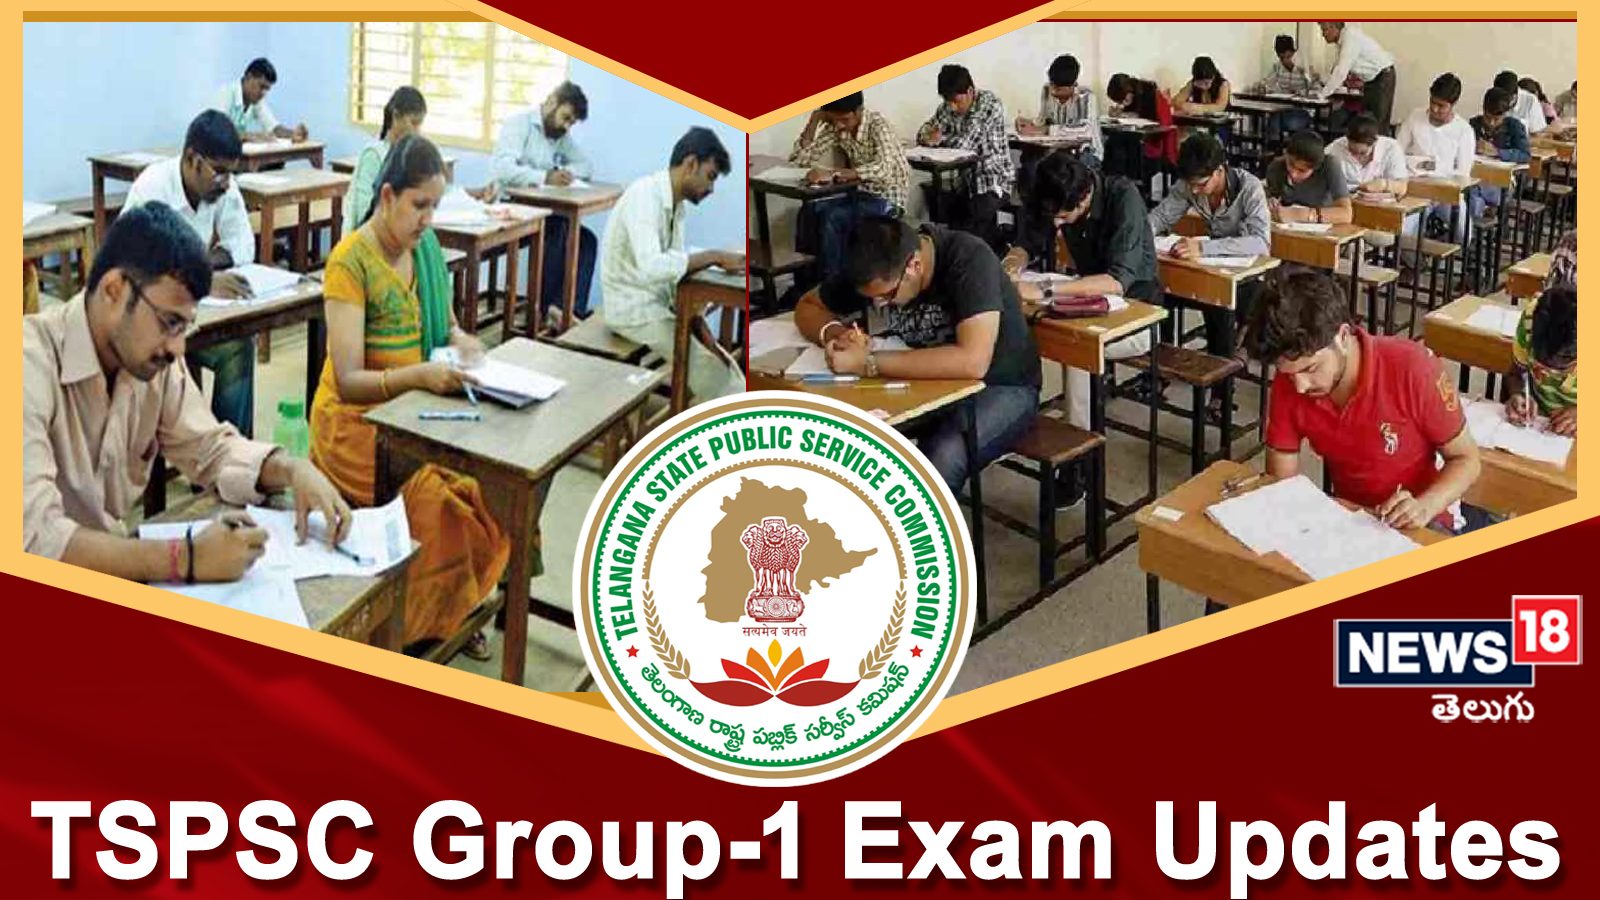 TSPSC Group 1 Mains Exam Dates గ్రూప్ 1 మెయిన్స్ పరీక్ష షెడ్యూల్